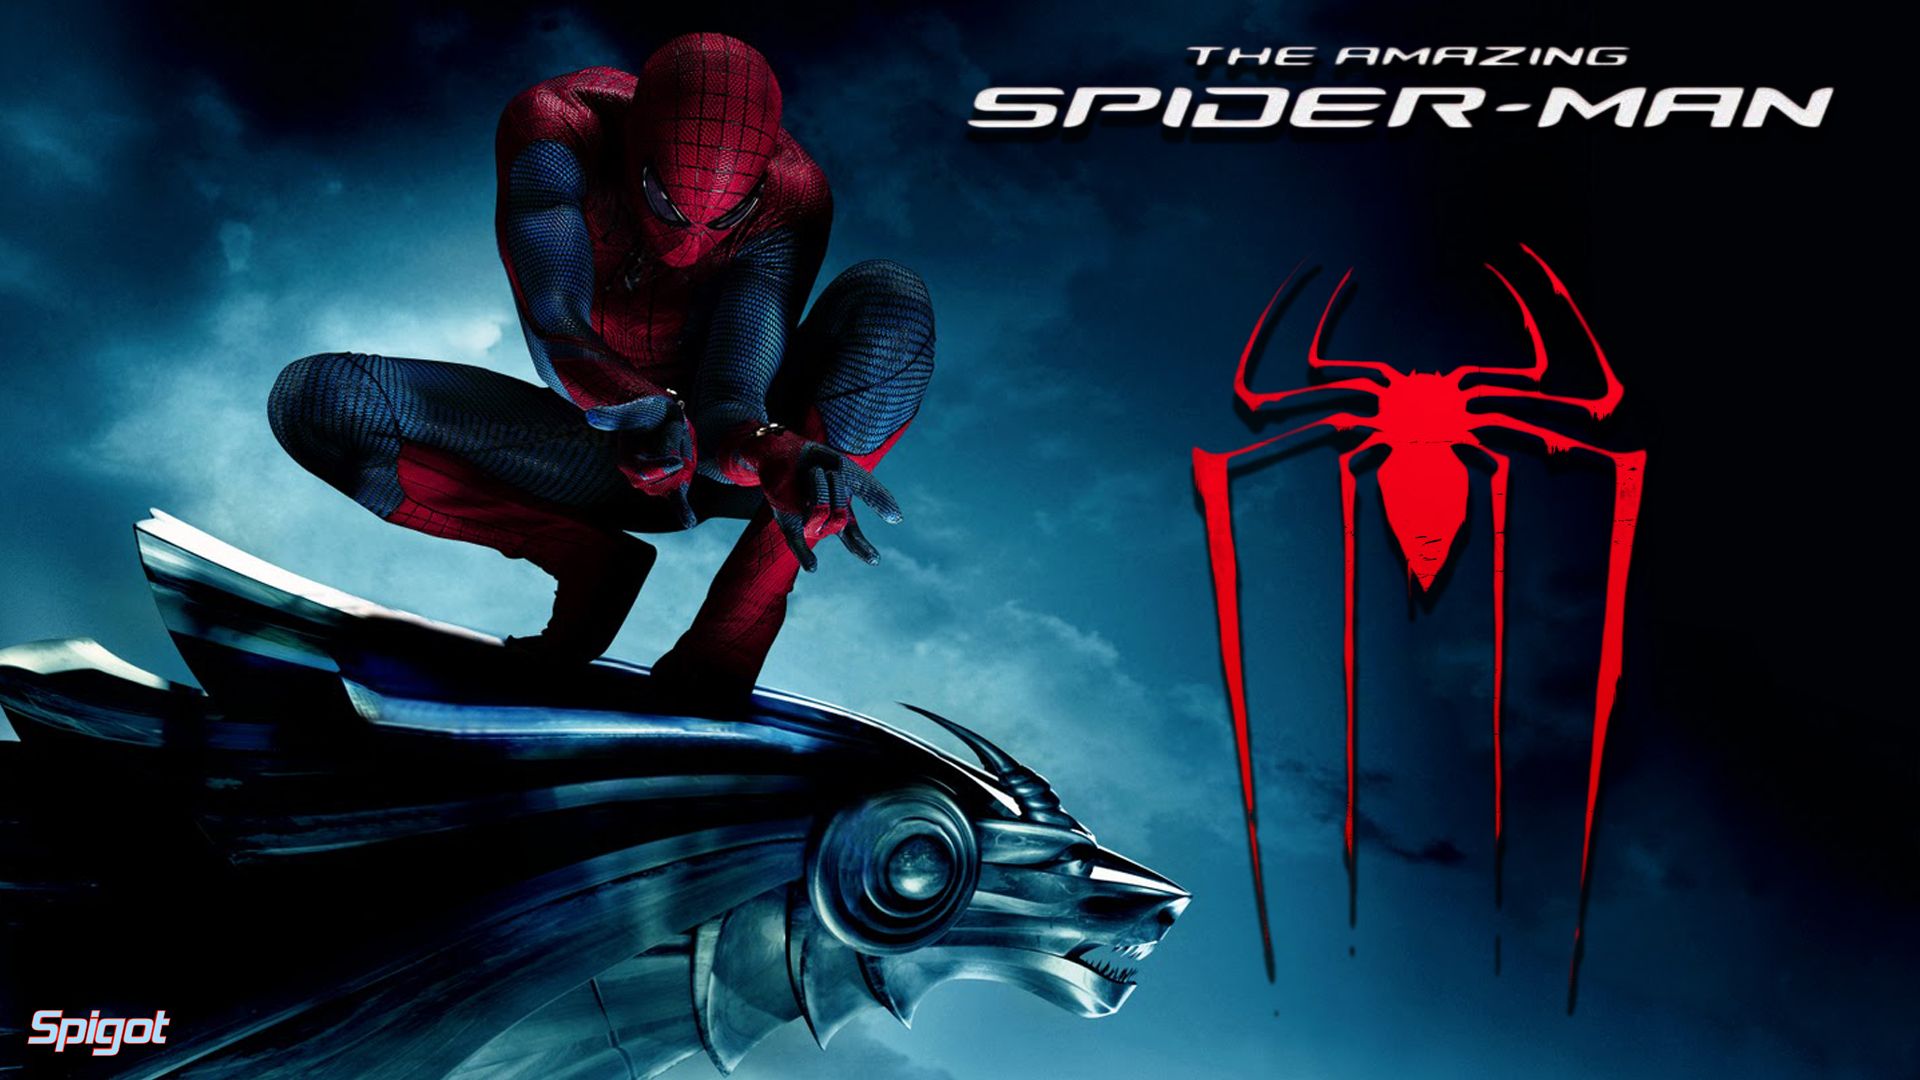 More Amazing Spider-Man Wallpapers | George Spigot's Blog